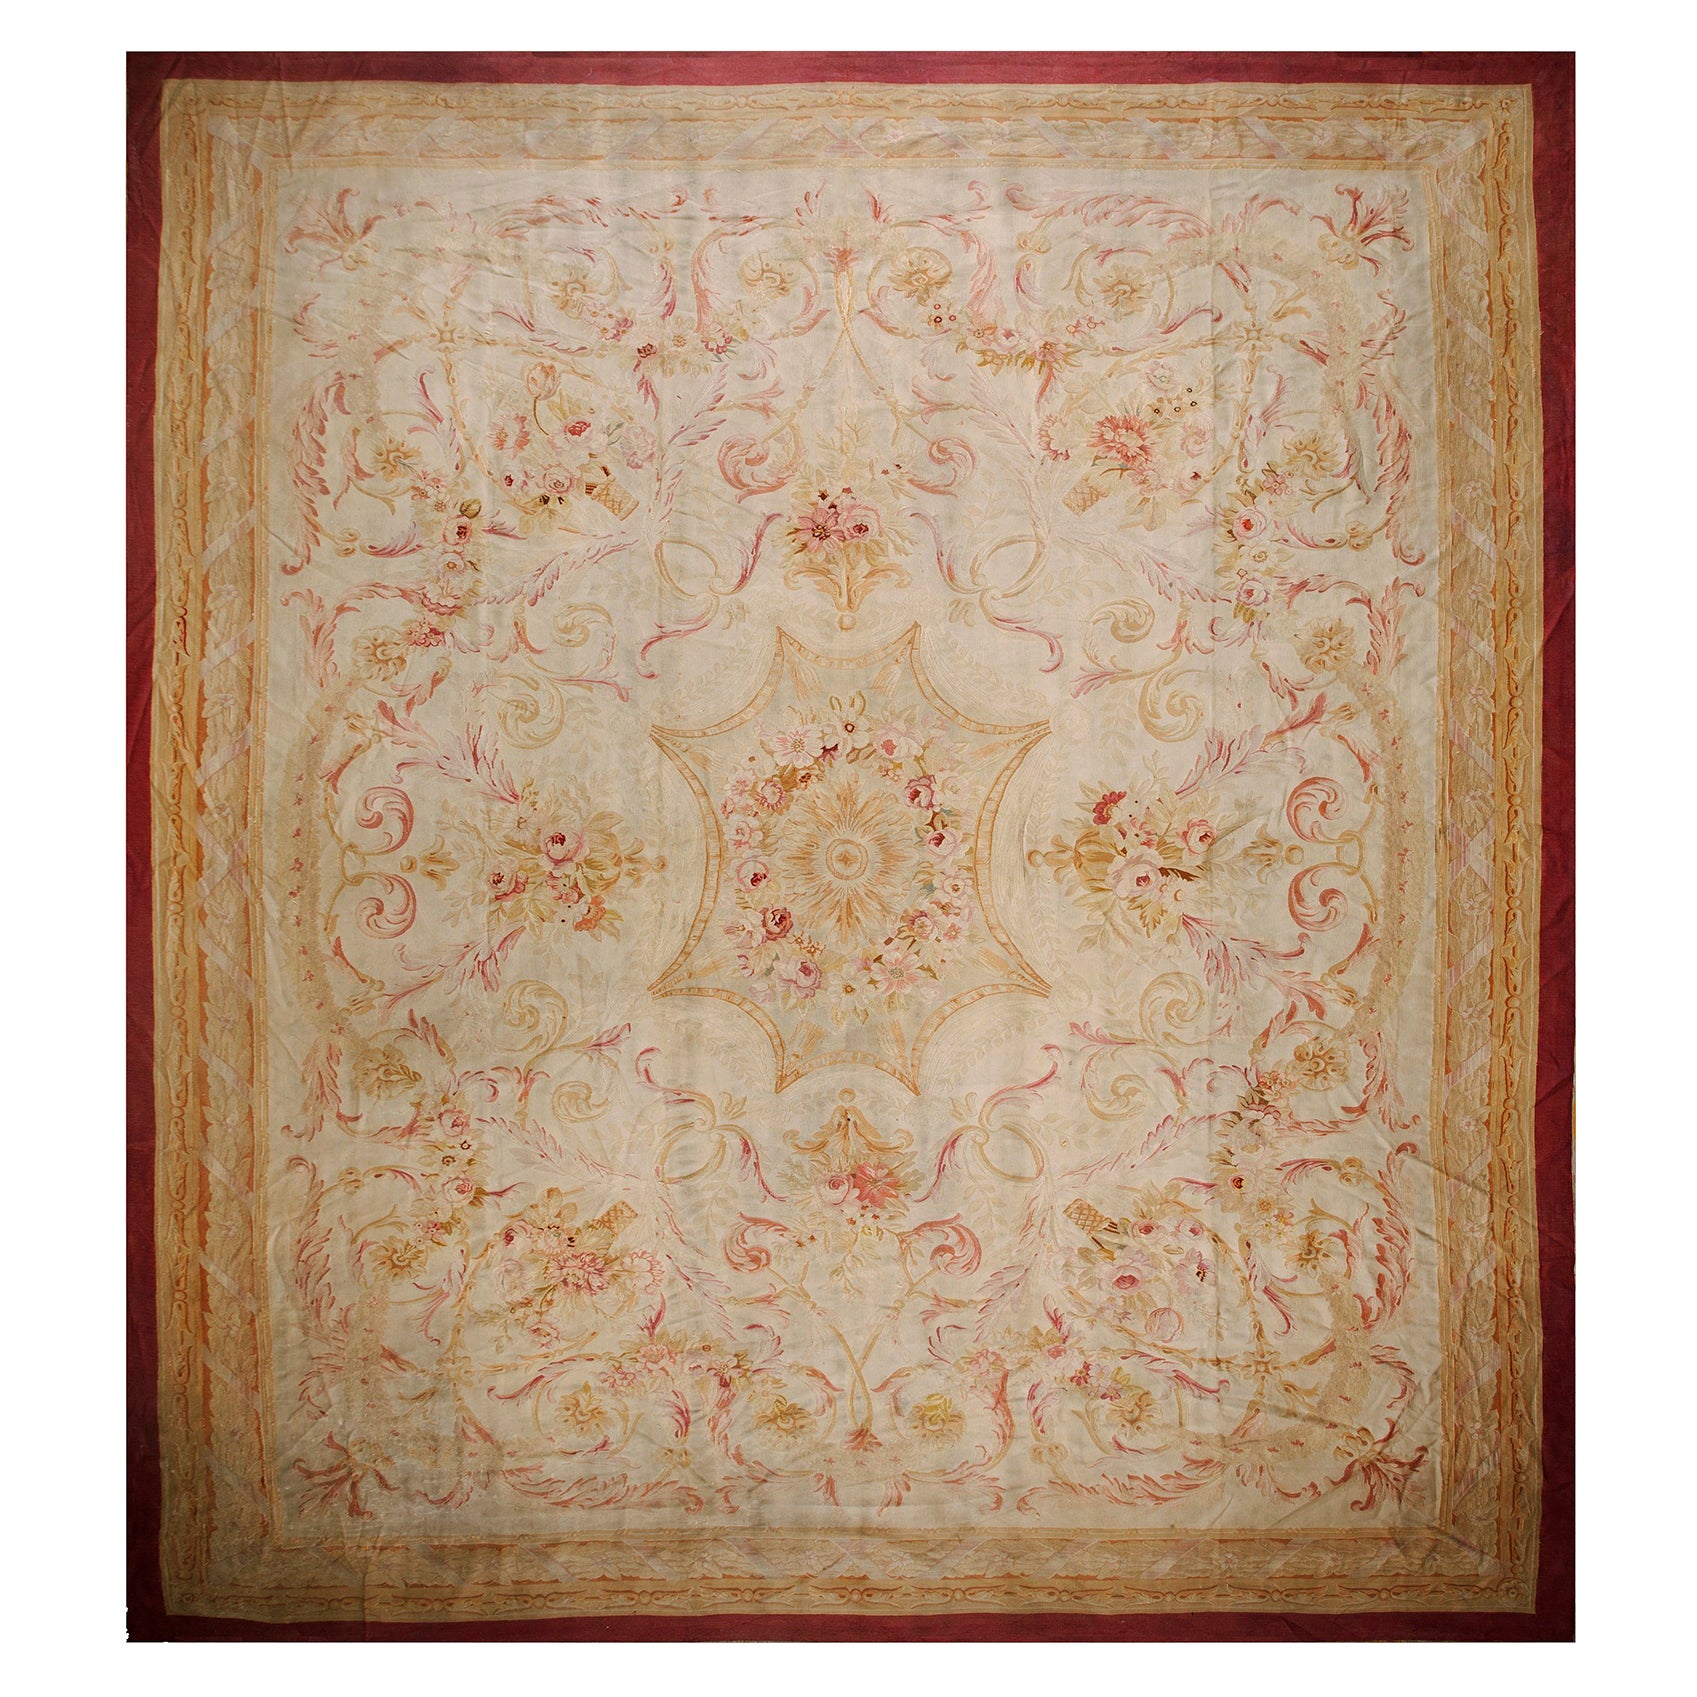 19th Century French Aubusson Carpet ( 13'6" x 14'9" - 421 x 450 cm ) For Sale